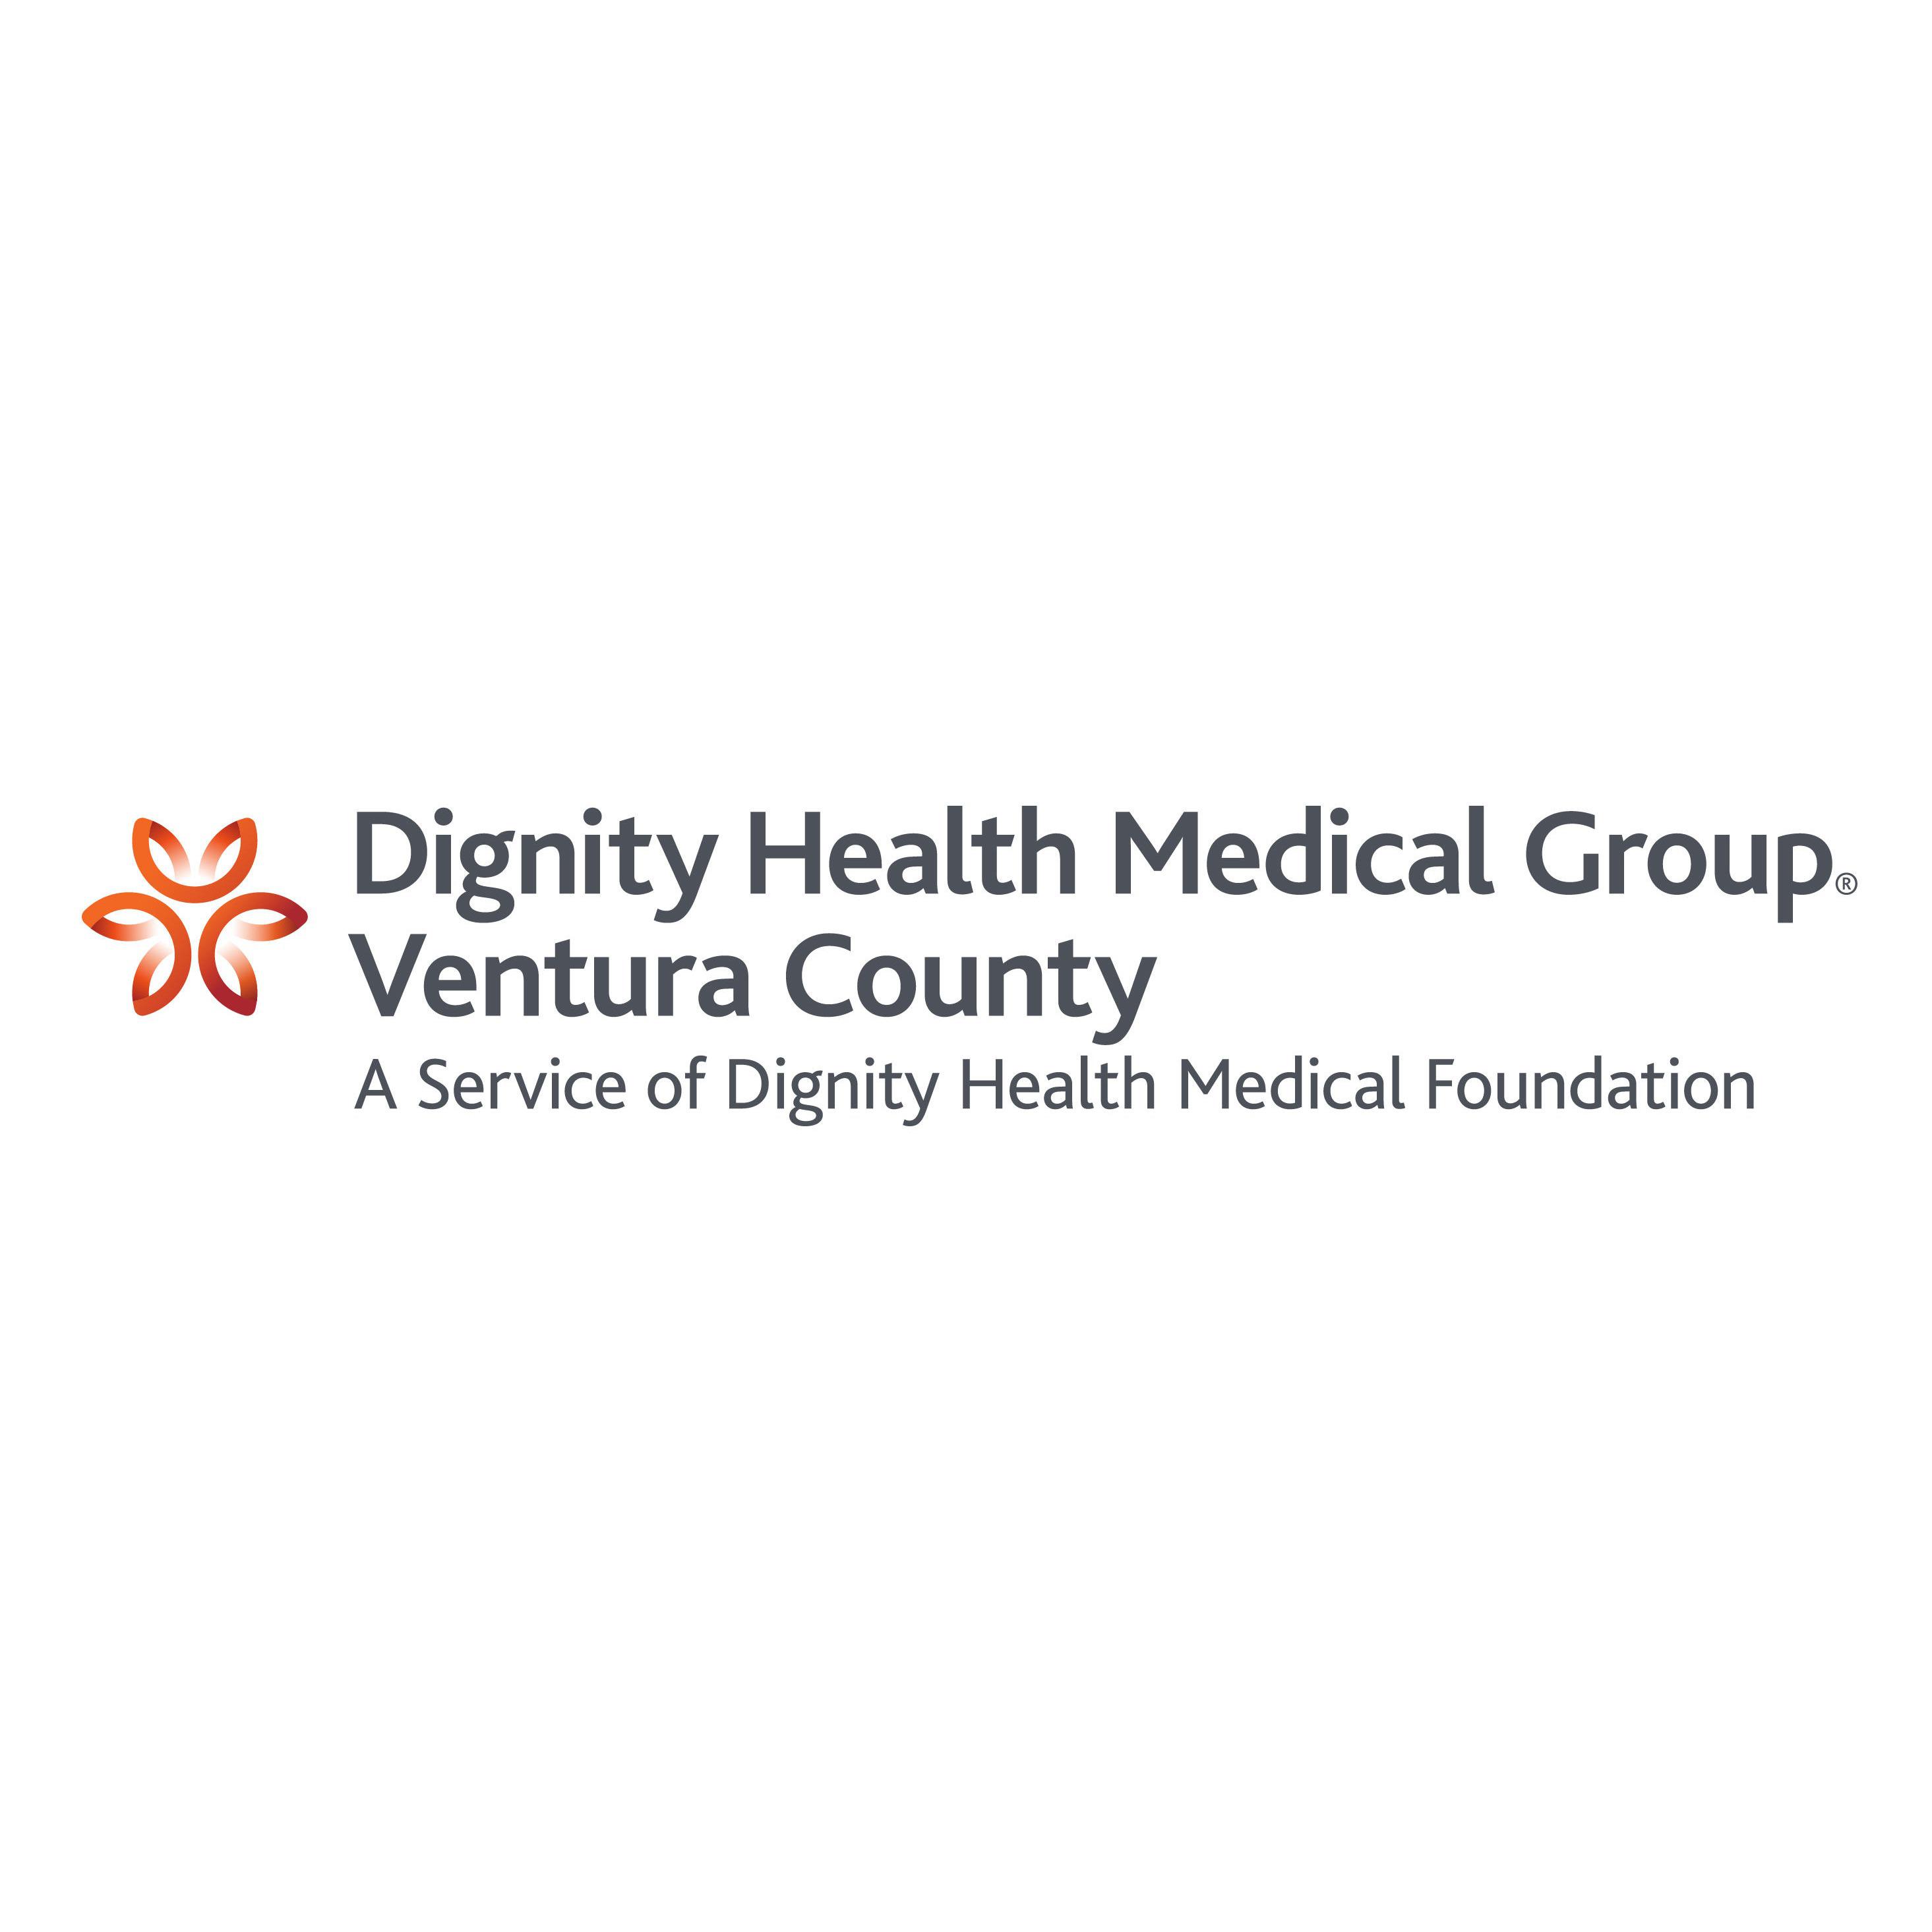 Dignity Health Medical Group - Ventura County (family medicine)